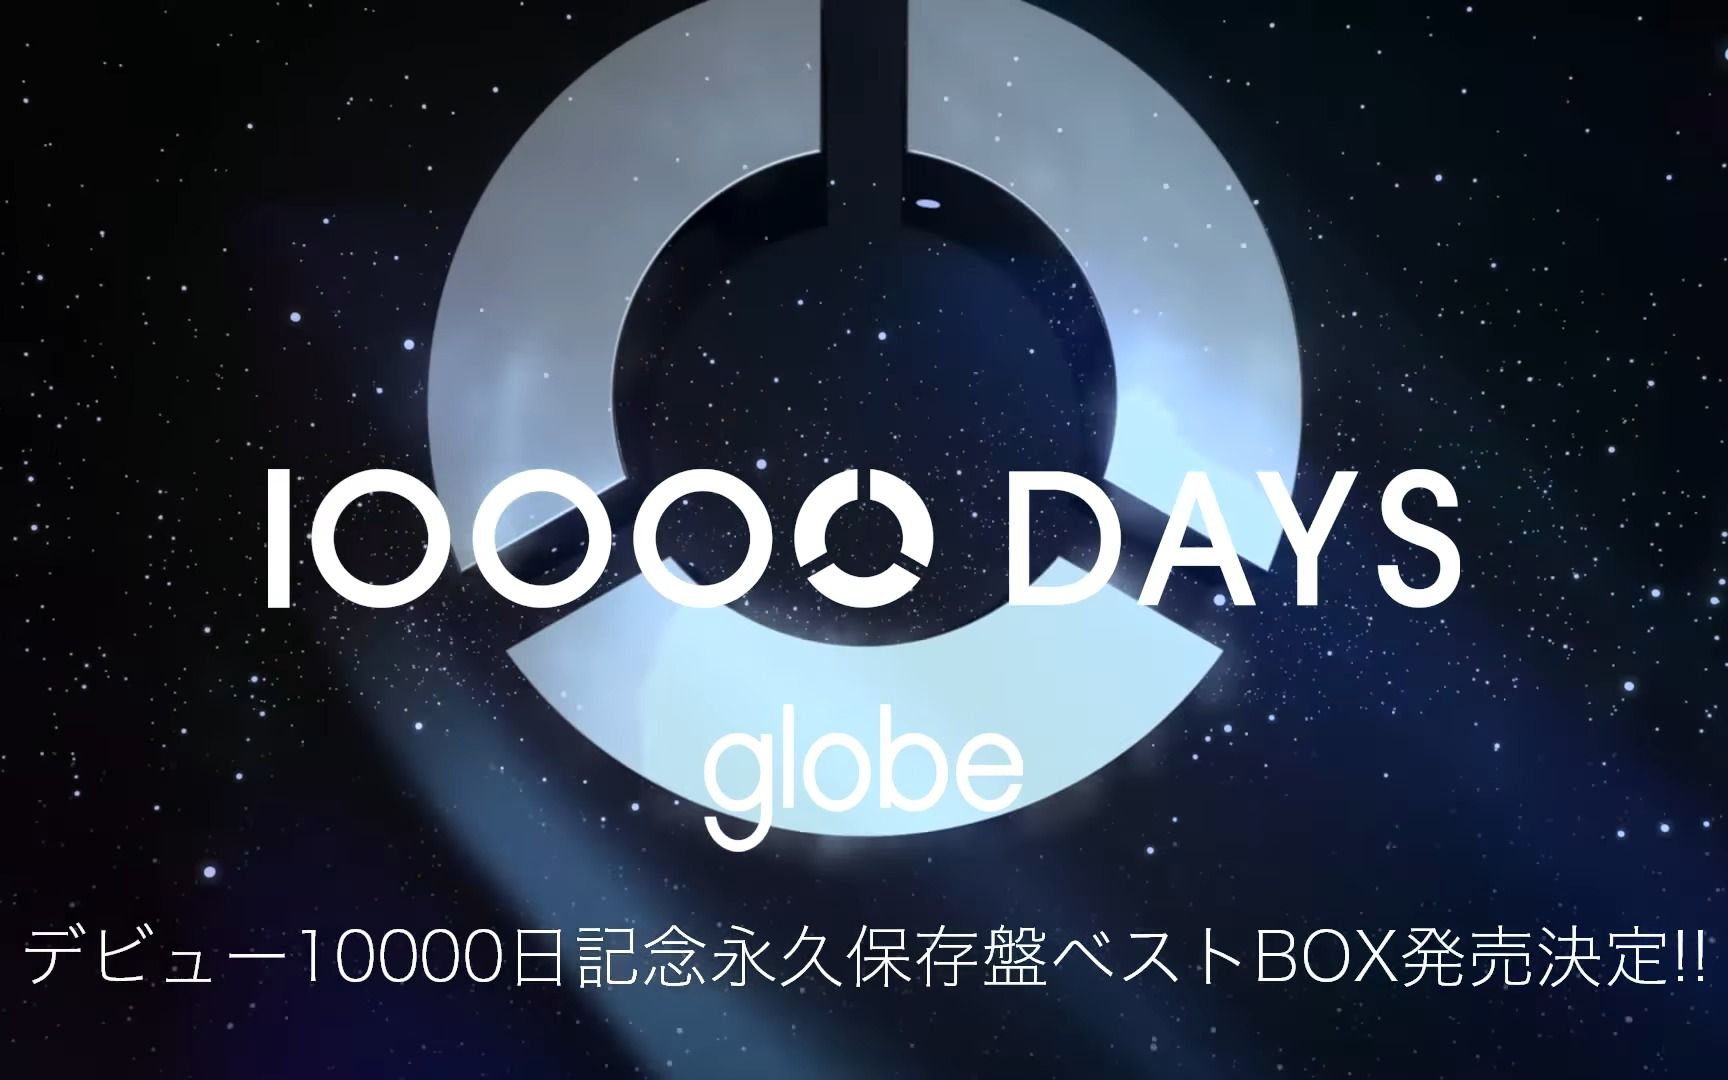 10000 DAYS globe-